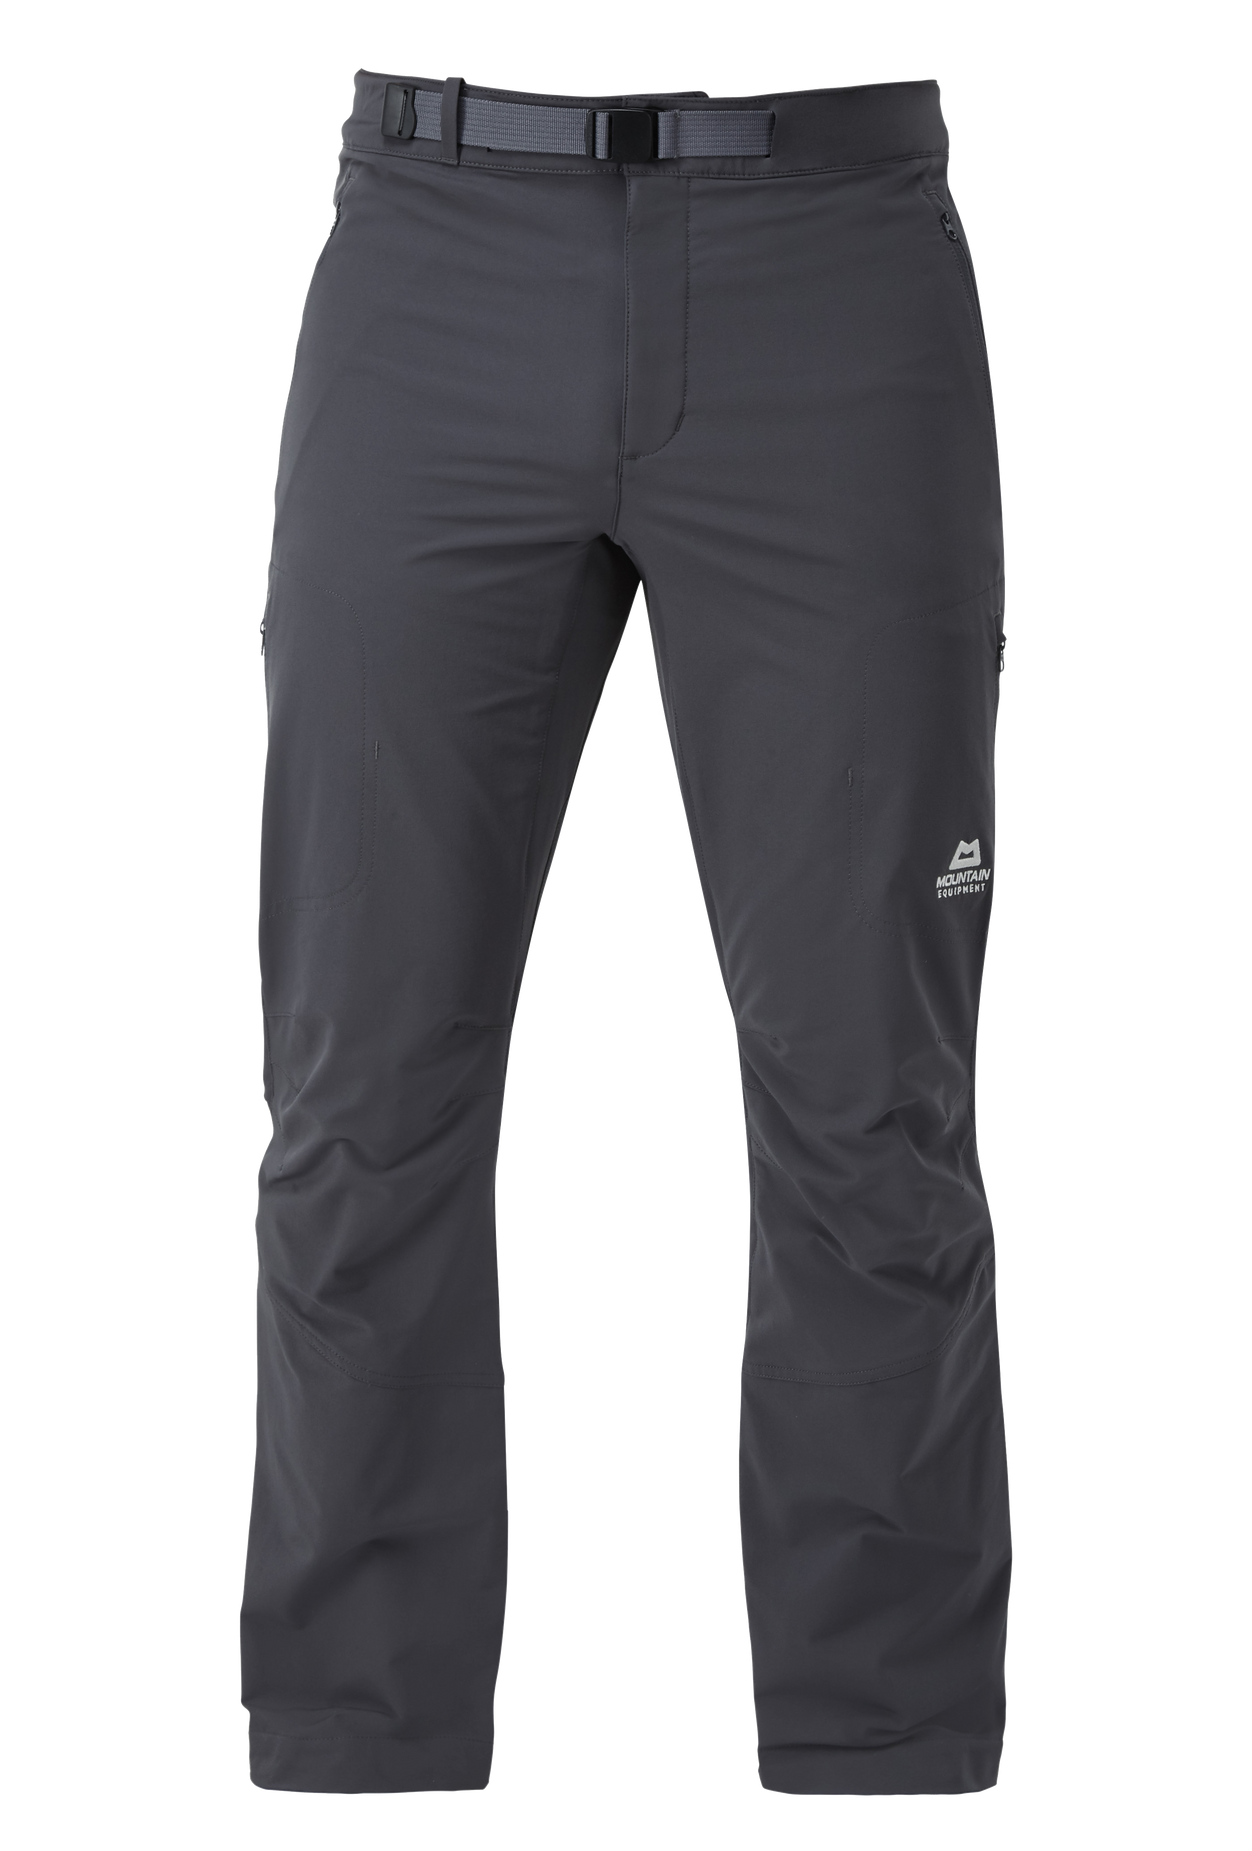 Mountain equipment pánské softshellové kalhoty Ibex Mountain Mens Pant - prodloužené Barva: Anvil Grey, Velikost: 32/M